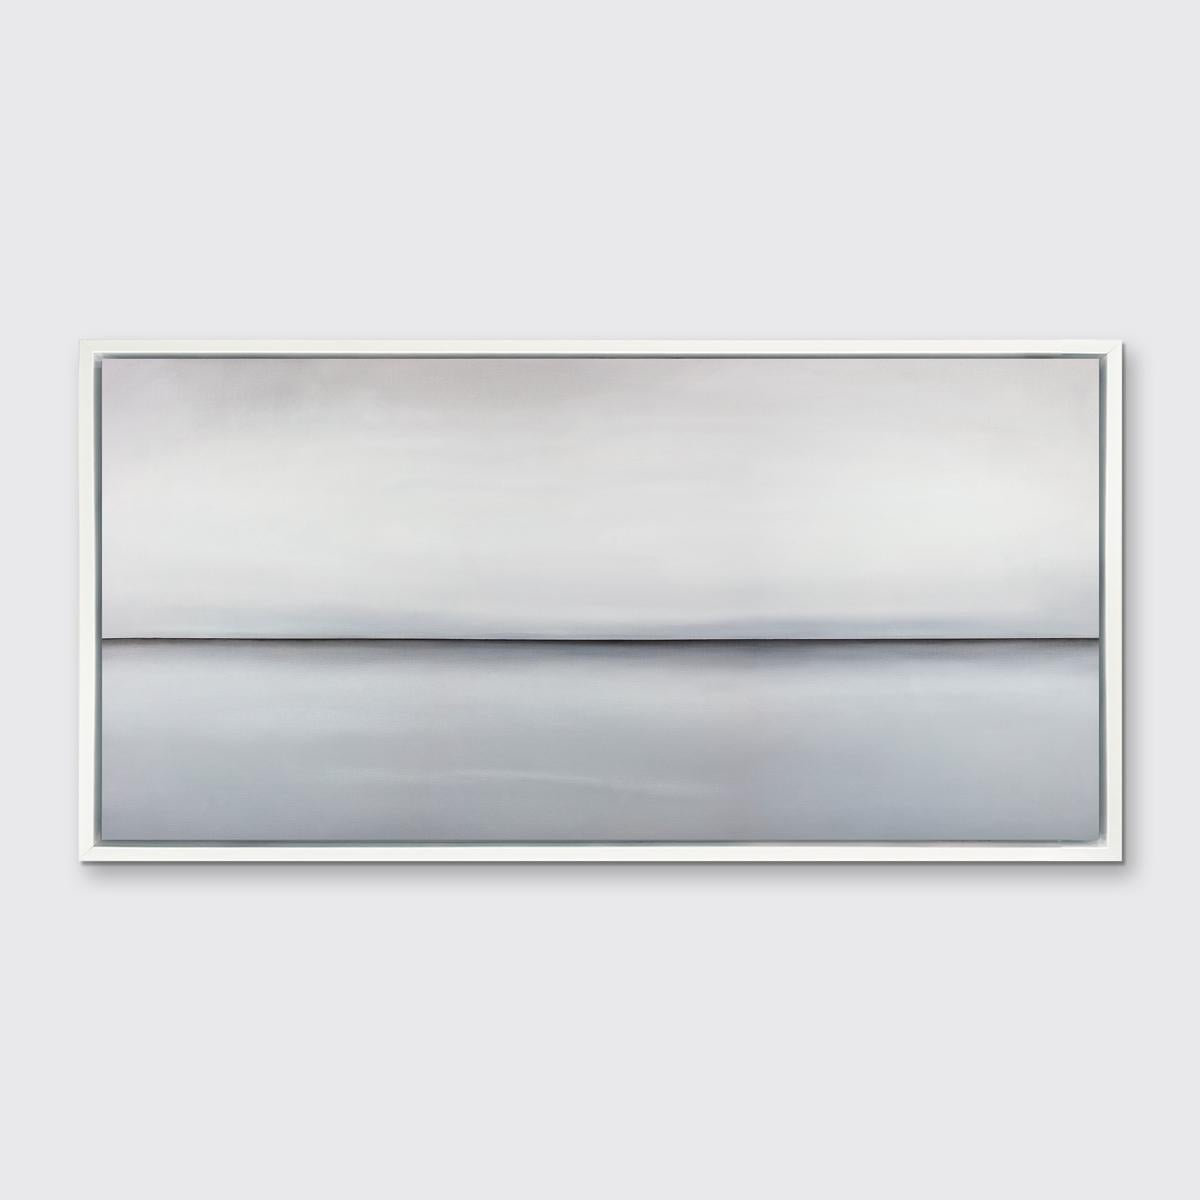 Abstract Print Tony Iadicicco - "Clear View" Impression giclée encadrée à édition limitée, 30" x 60".